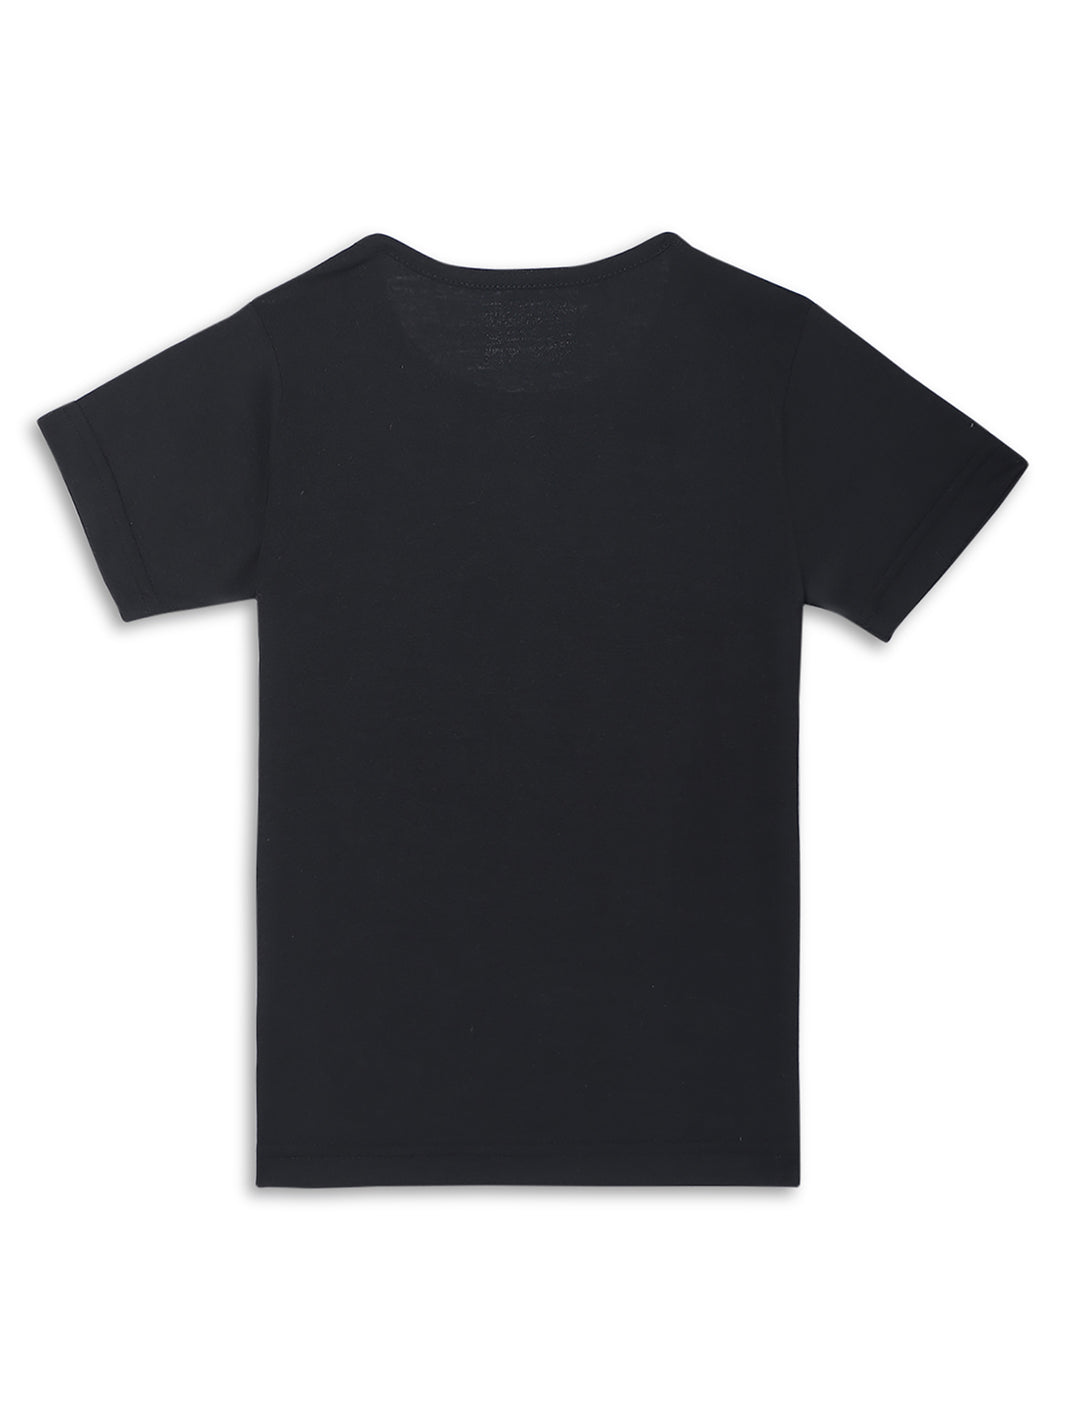 Vimal Jonney Printed  Black  Regular Fit Cotton blended T-shirts For Kids